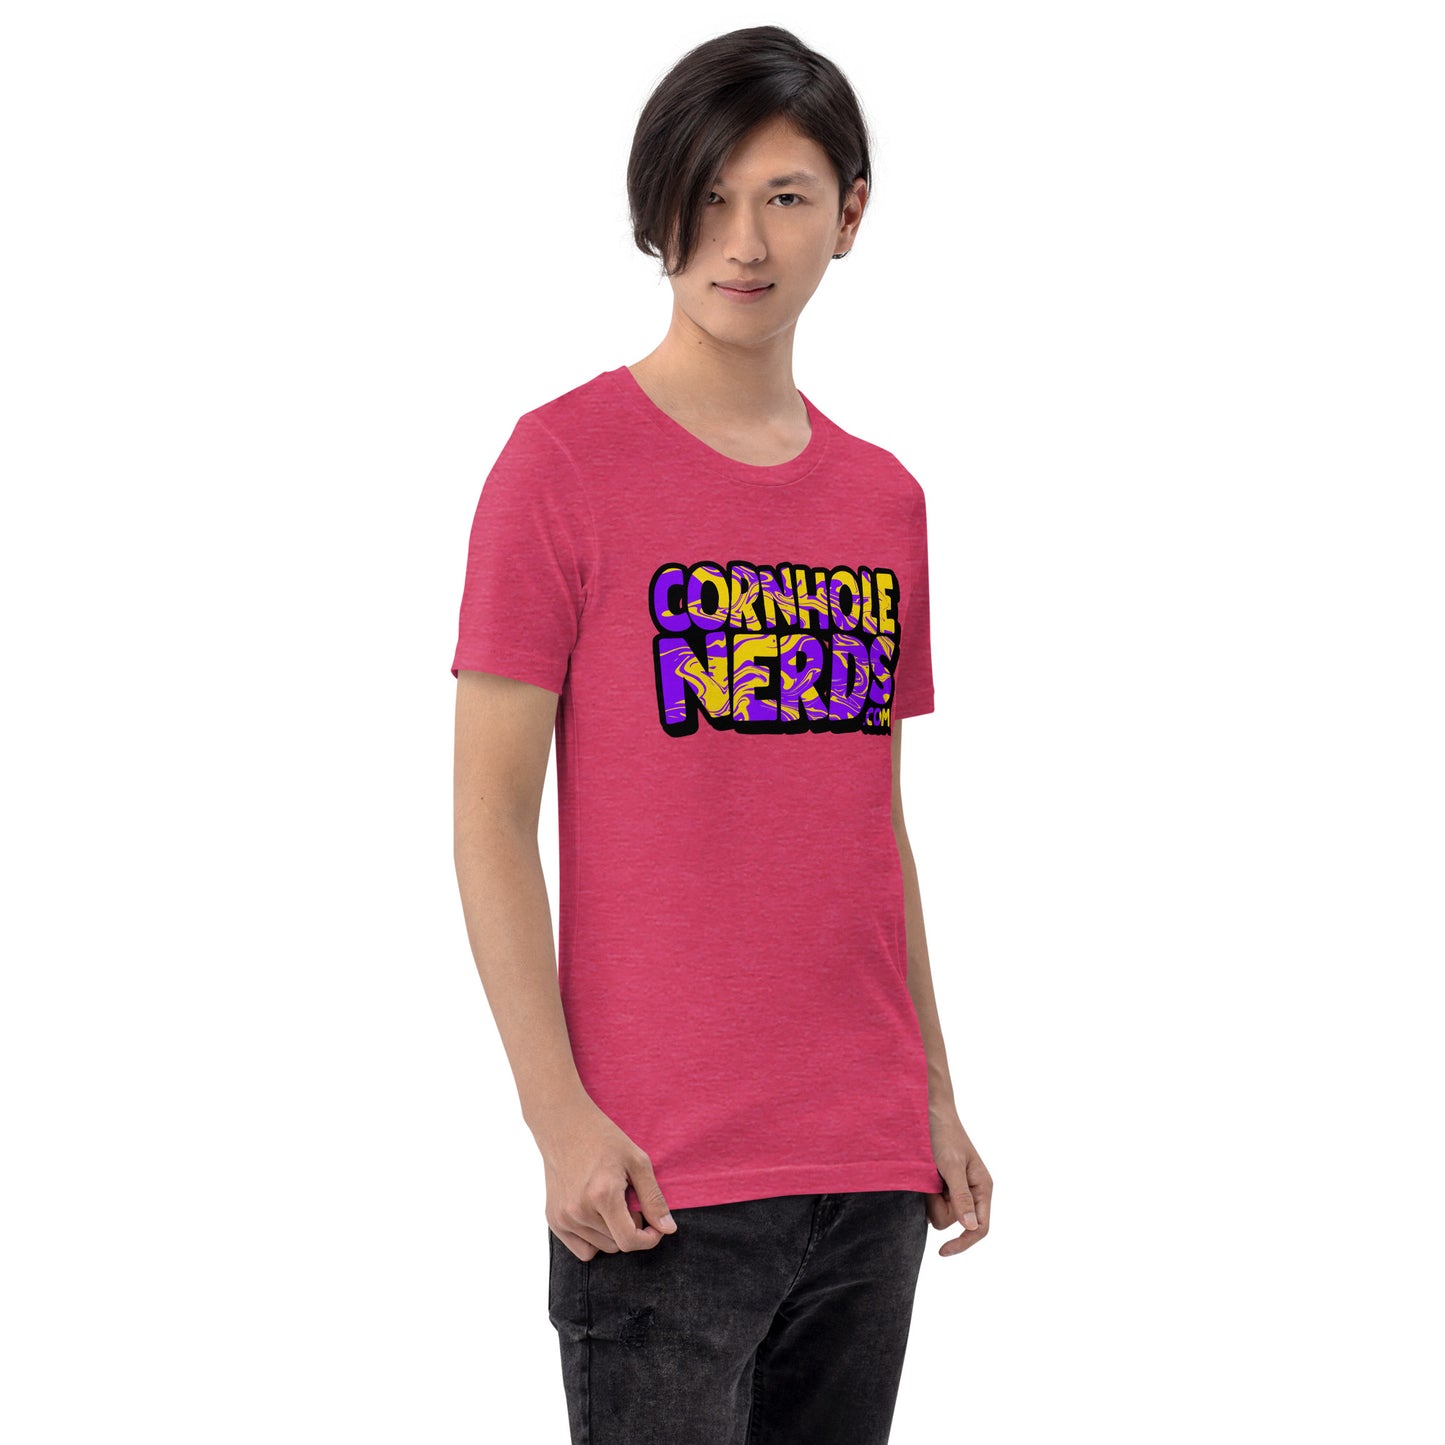 Lola's Purple/Yellow Swirl NerdWear Unisex t-shirt